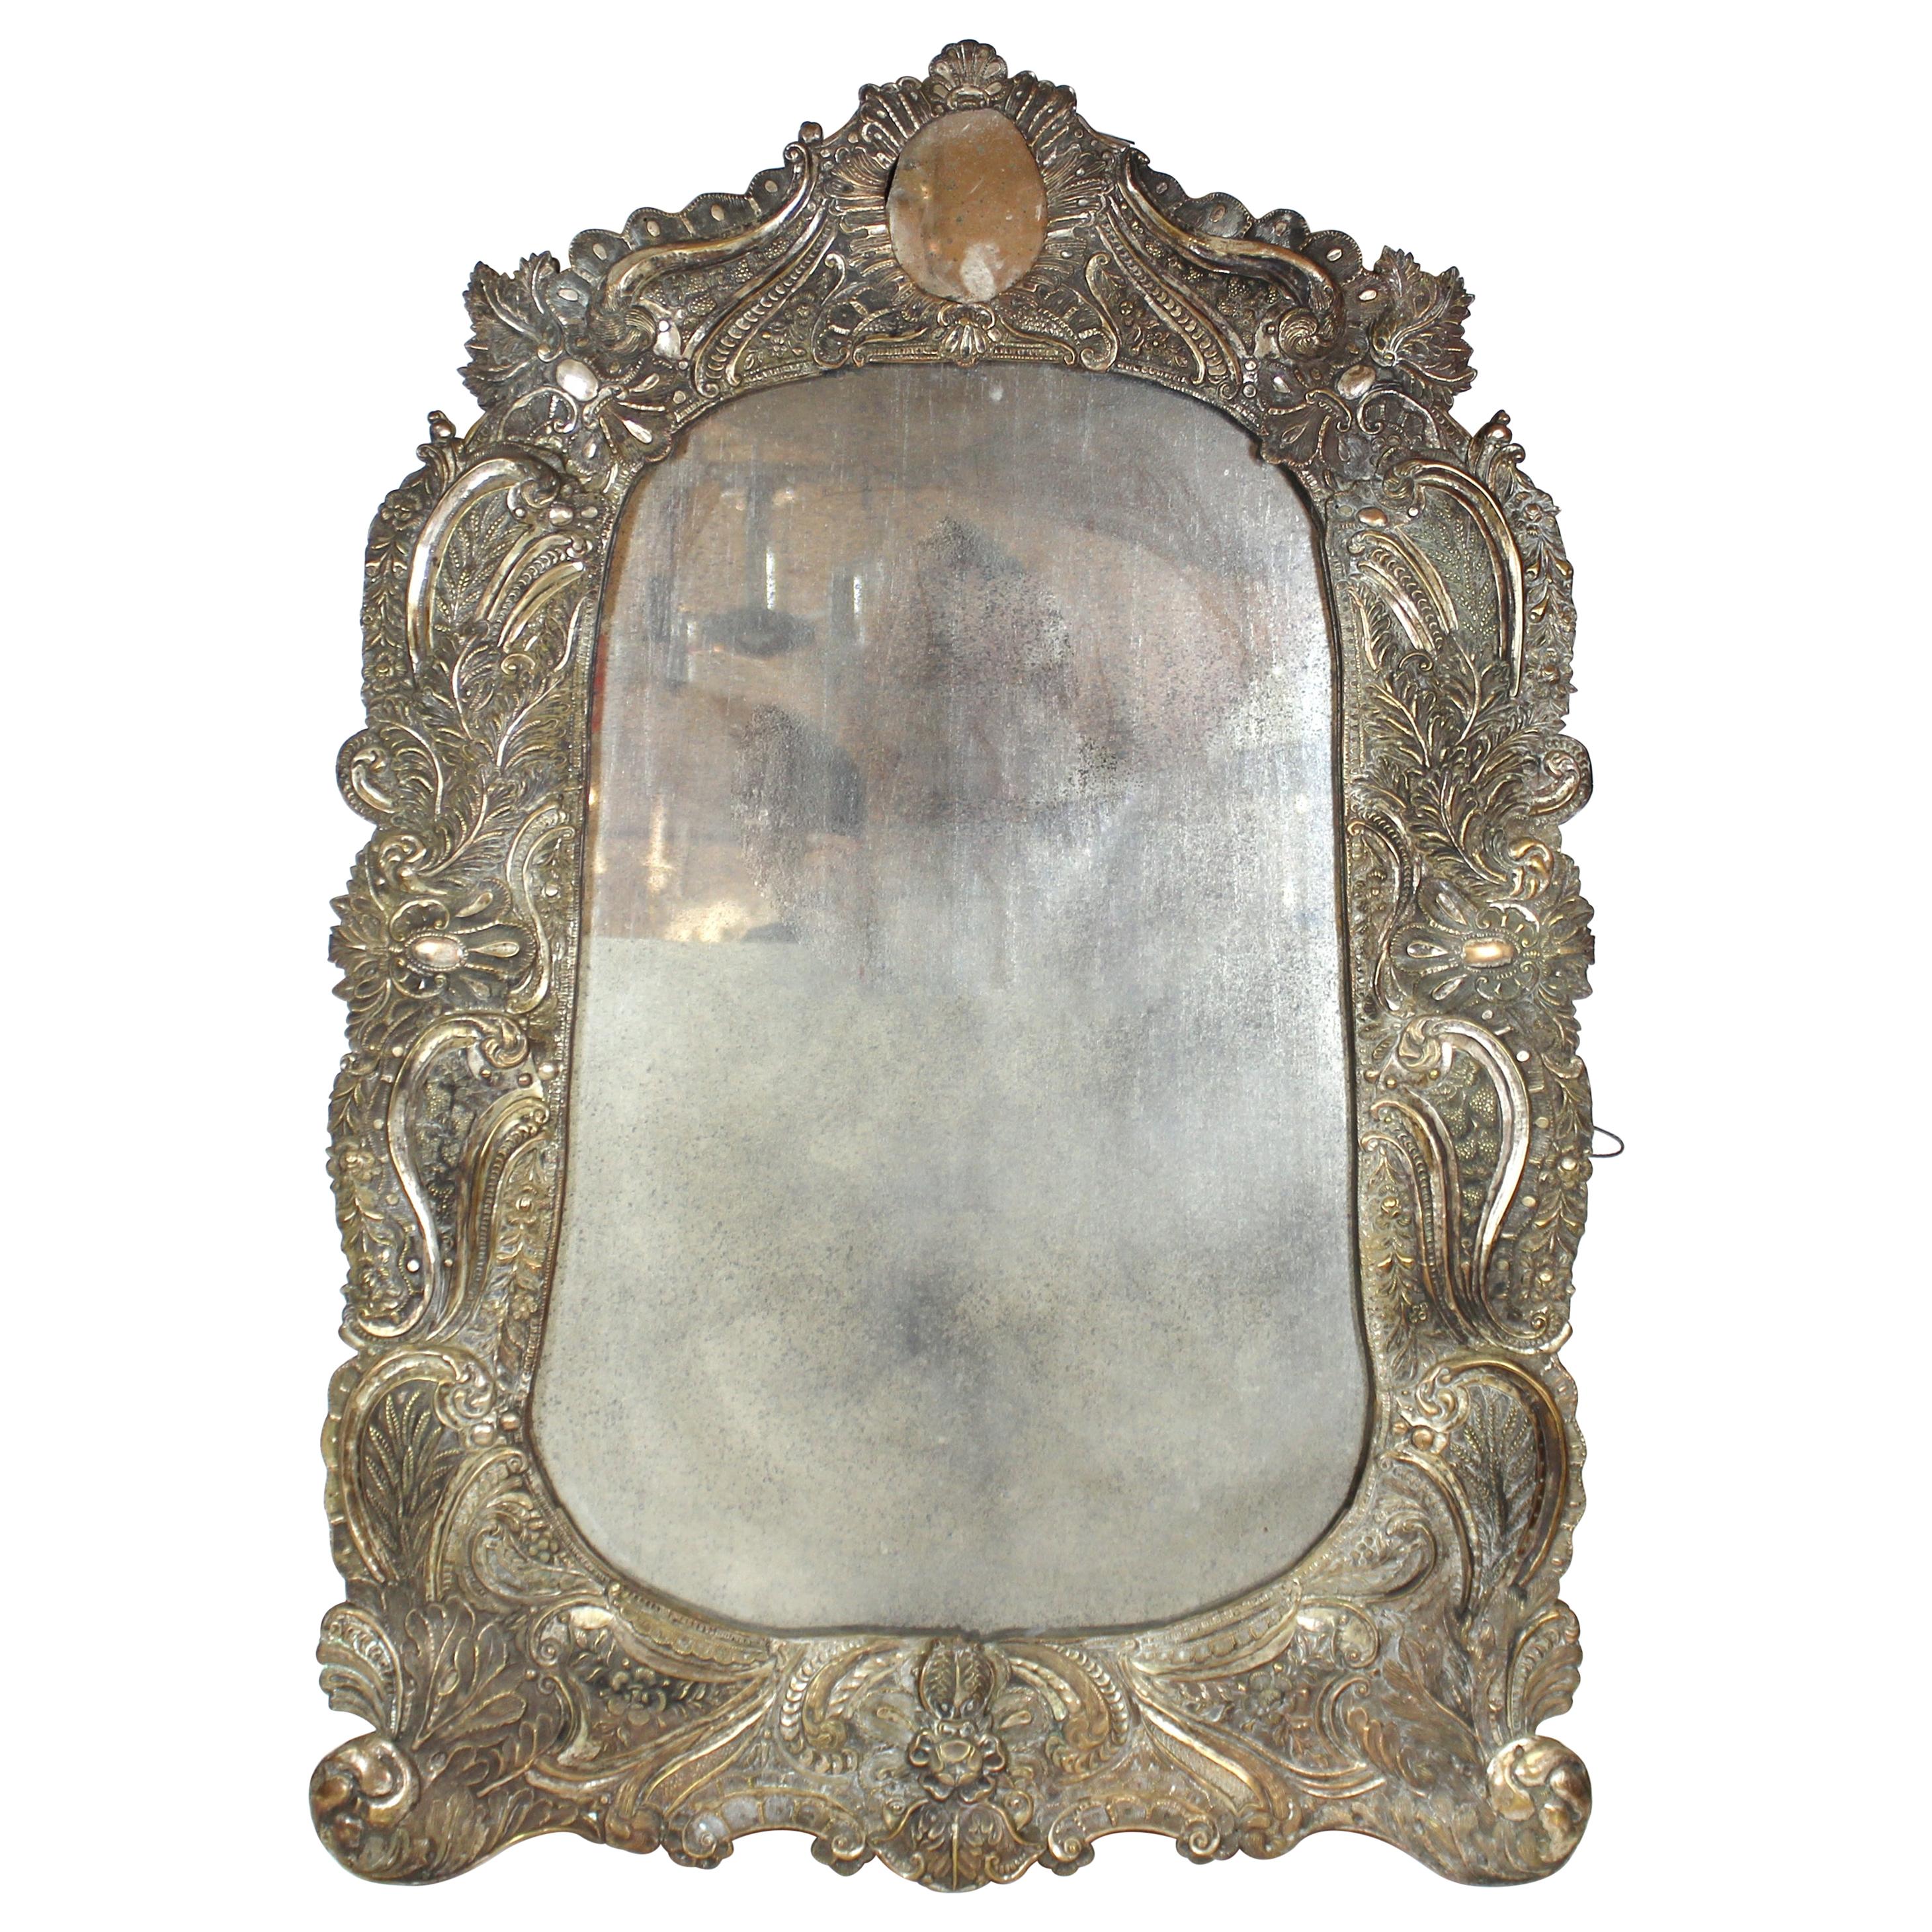 Spanish Colonial Baroque Repoussé Silver Ornate Mirror Frame